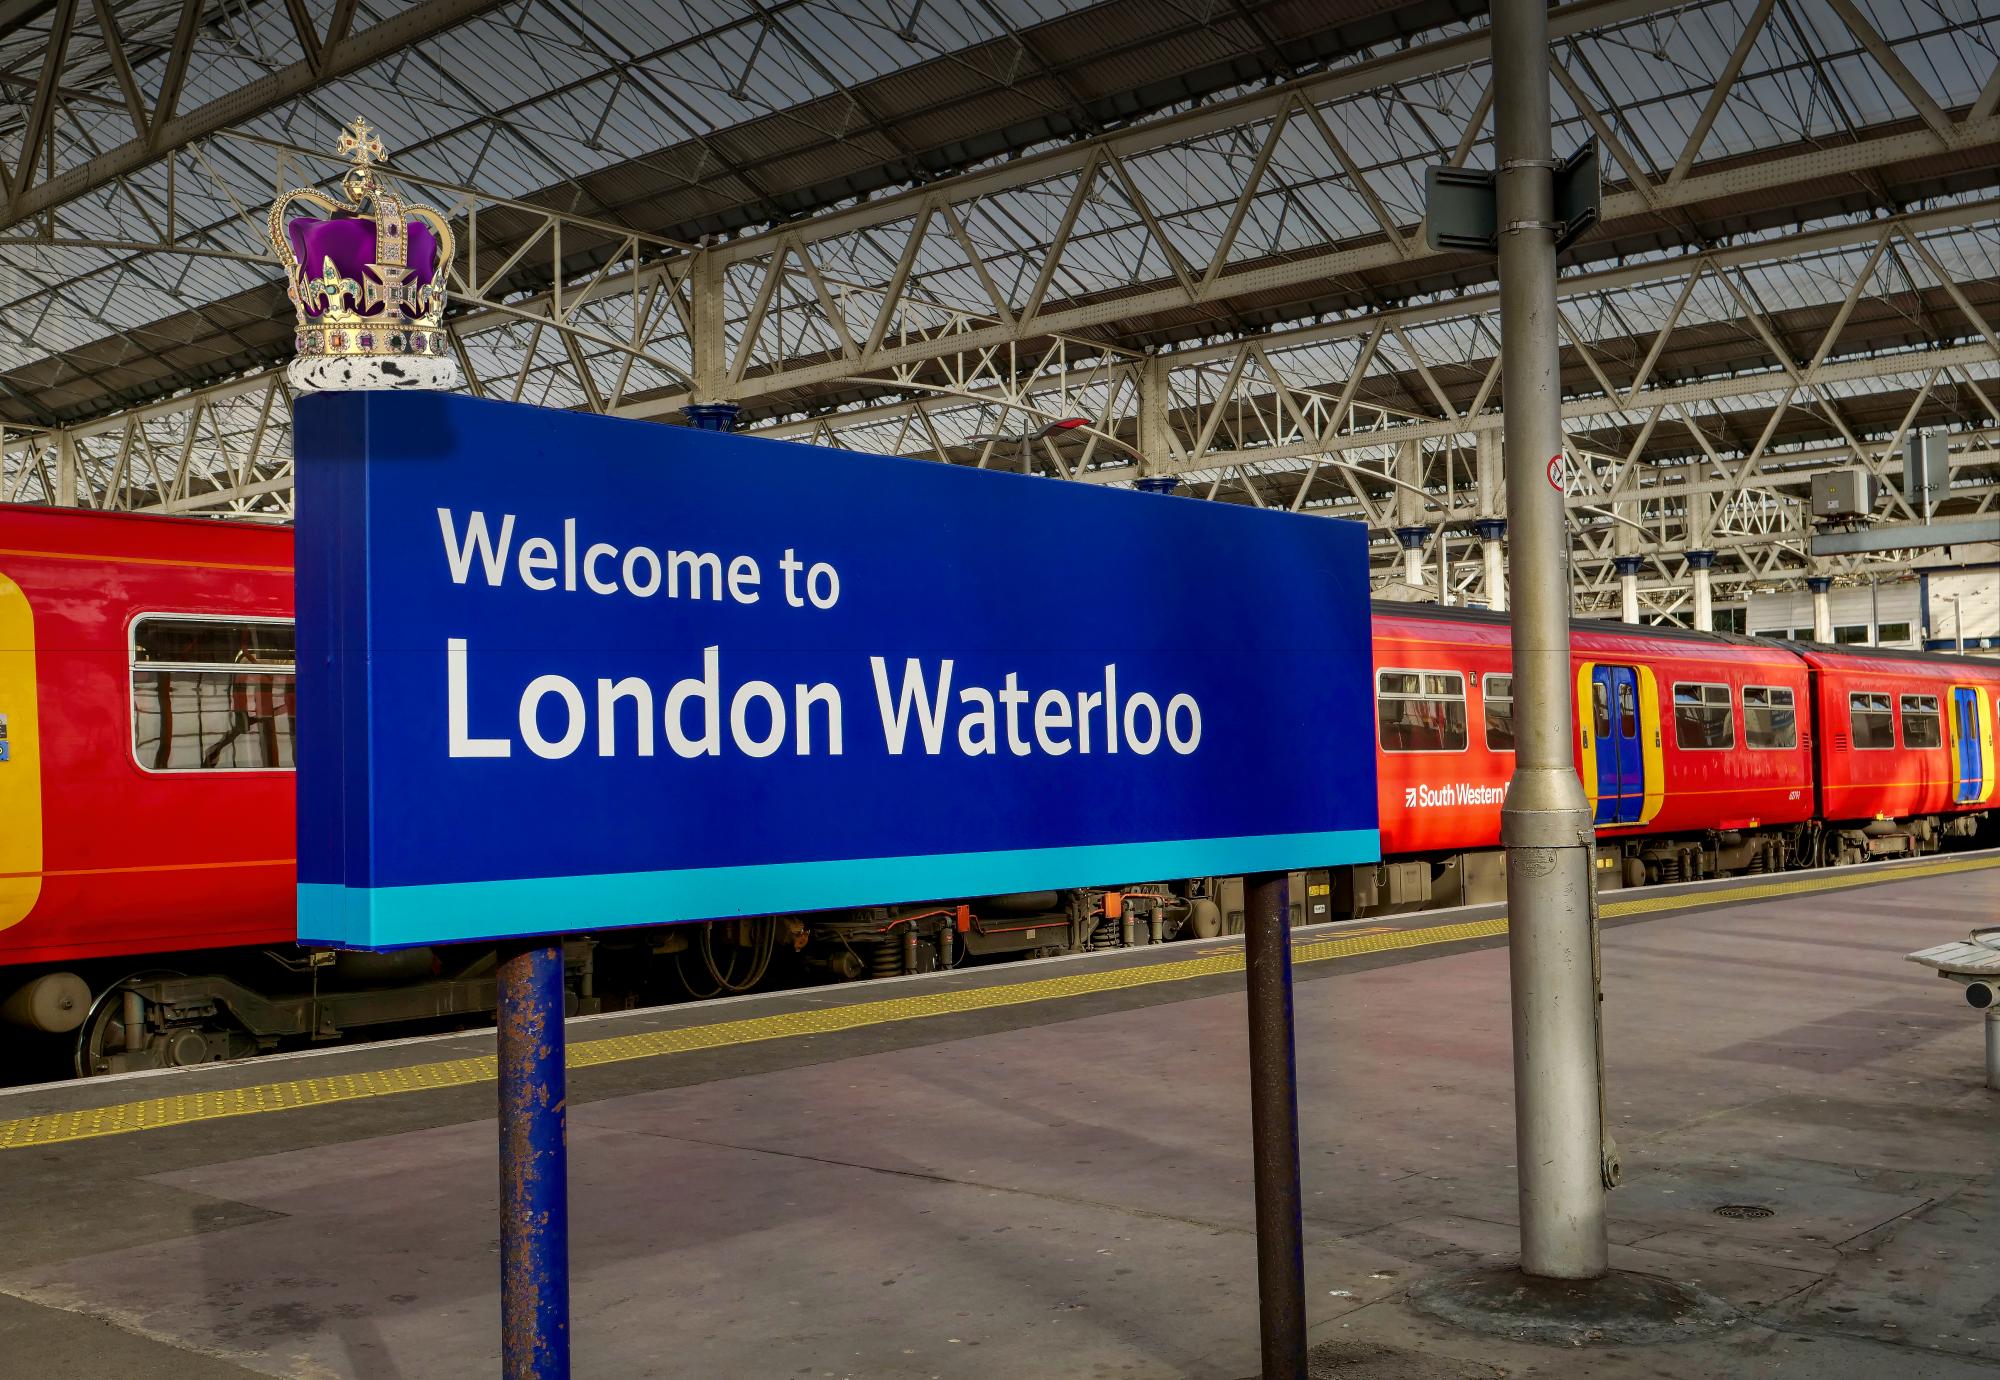 Waterloo station, via Istock 